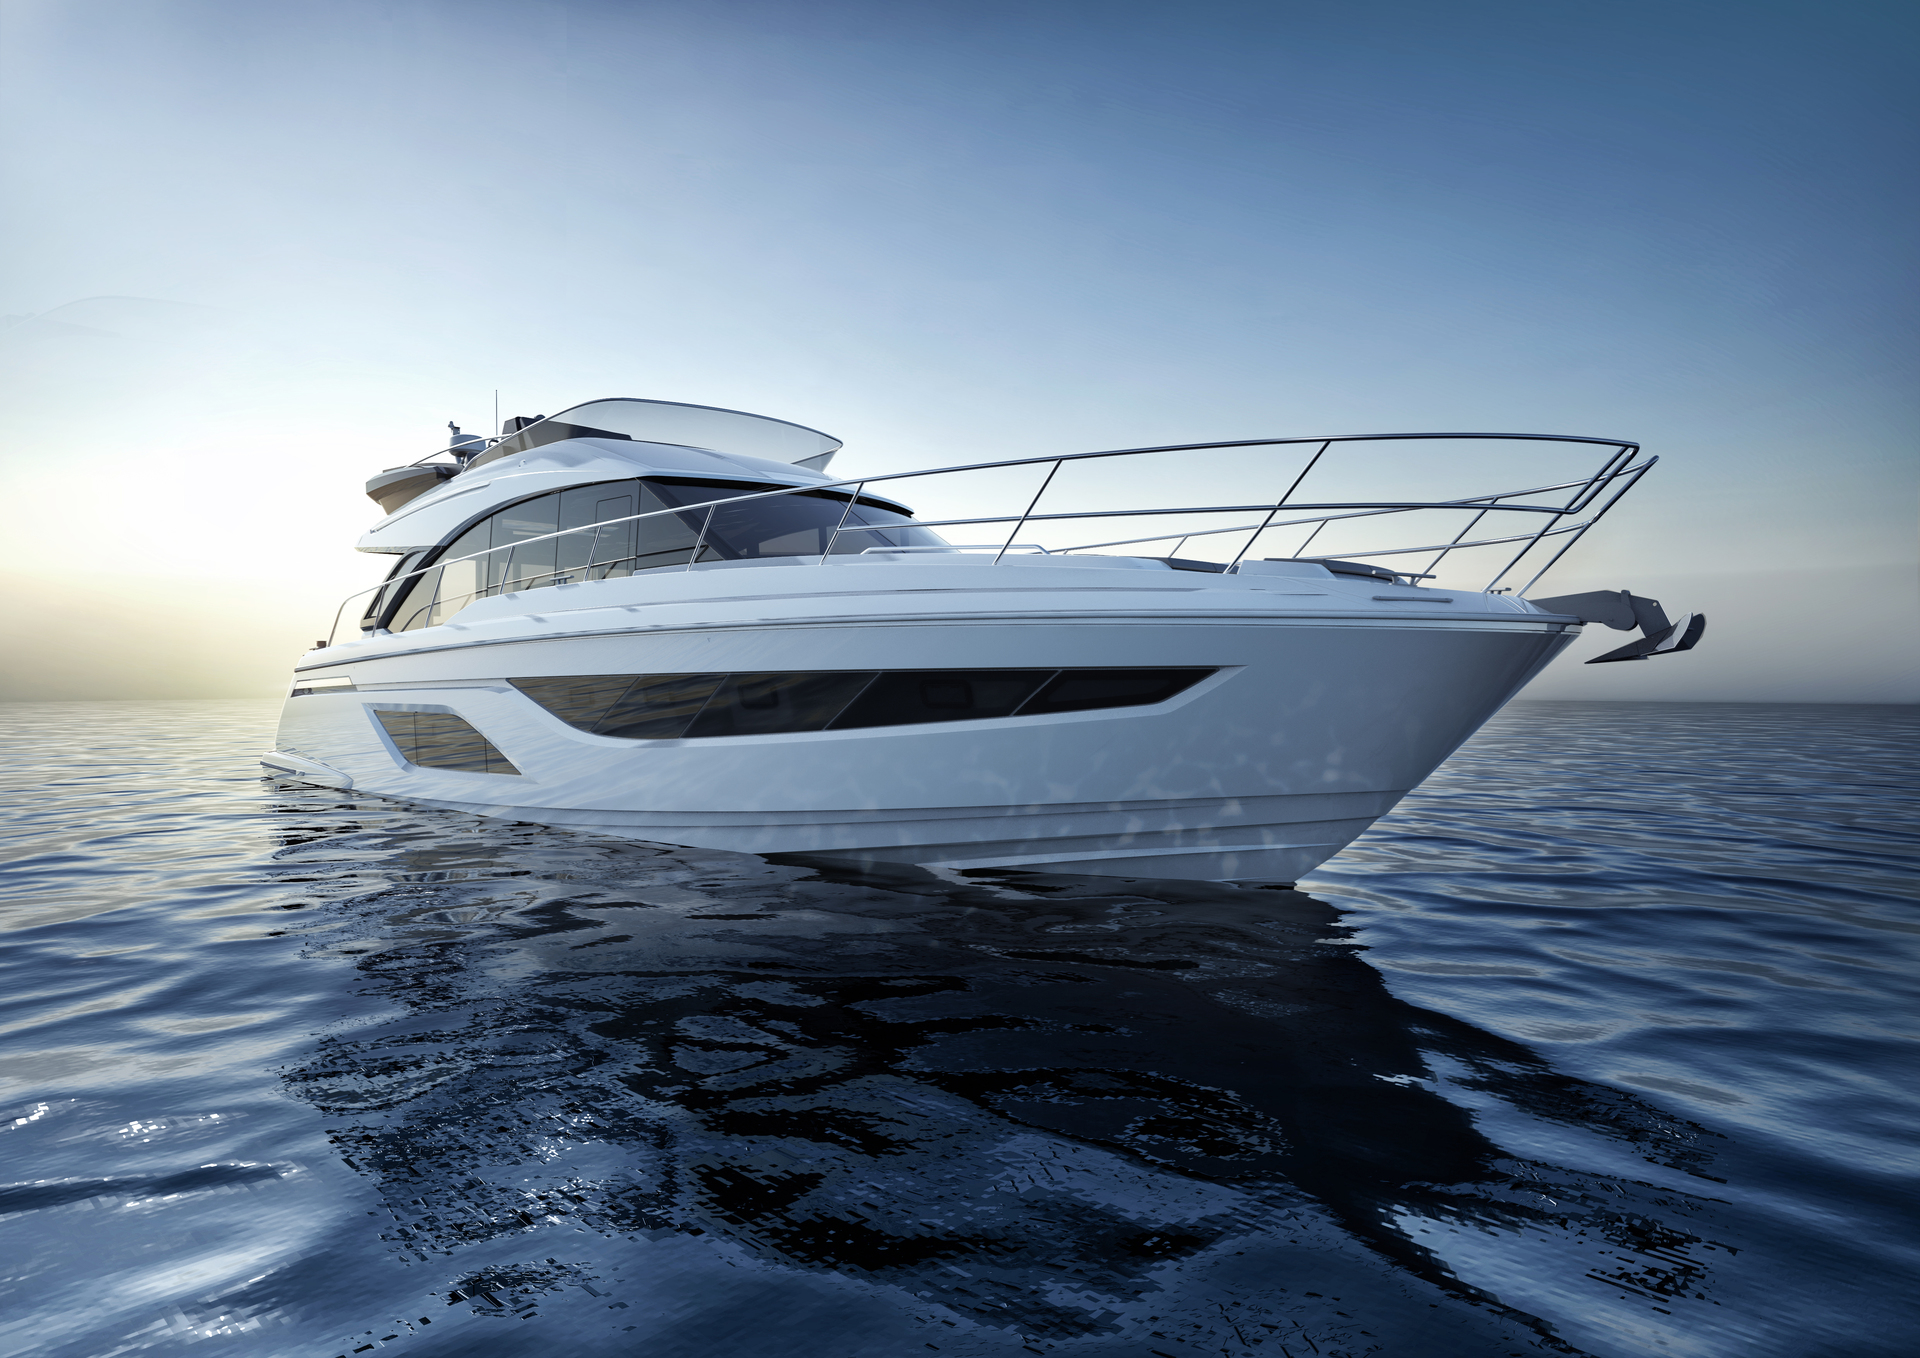 Power boat FOR CHARTER, year 2018 brand Bavaria and model R55, available in Pantalán del Mediterráneo Palma Mallorca España